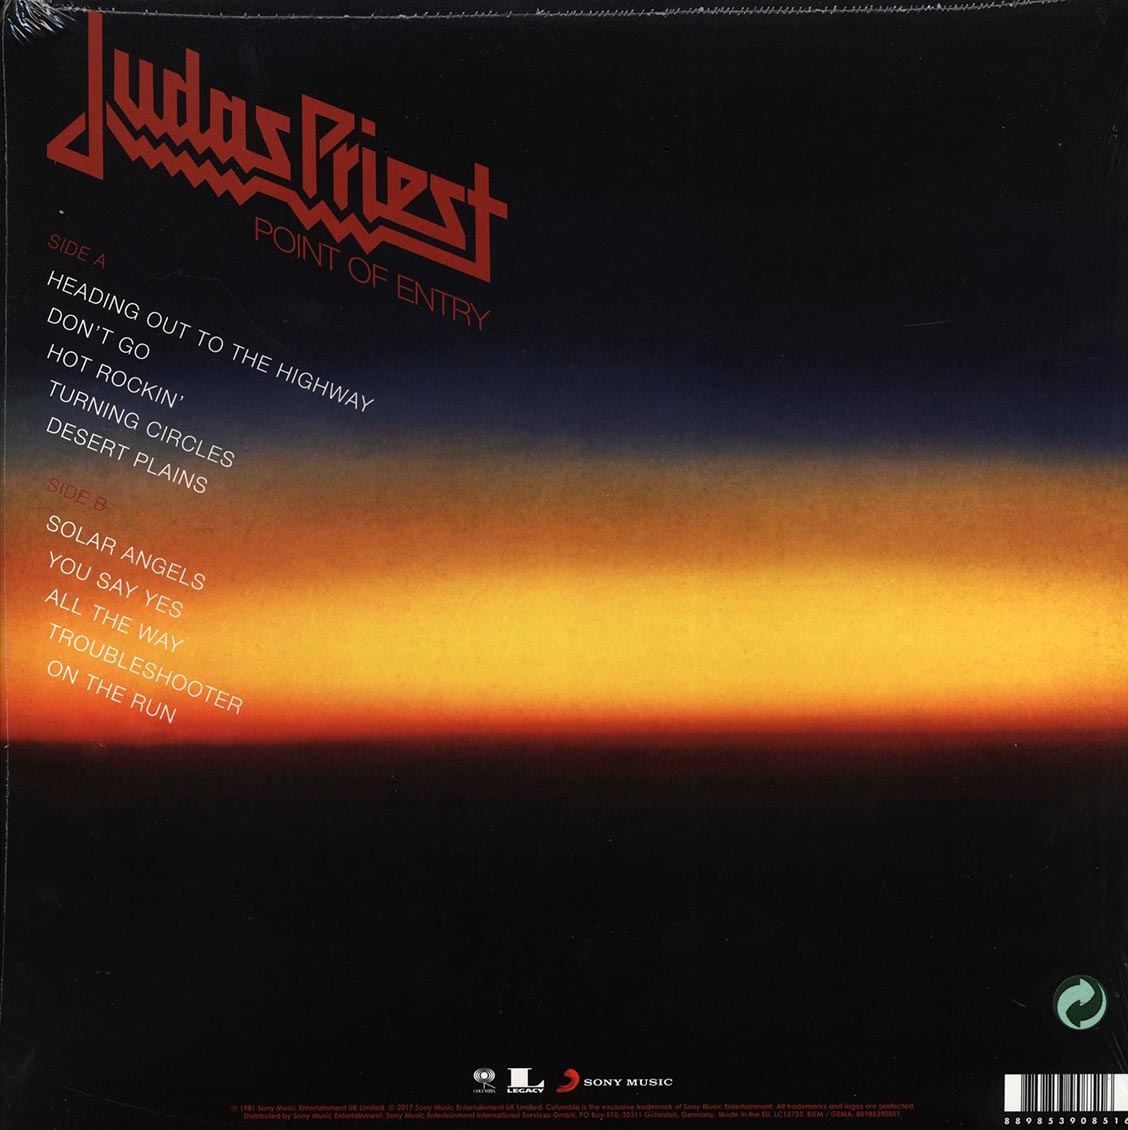 Judas Priest - Point Of Entry (incl. mp3) (180g) - Vinyl LP, LP